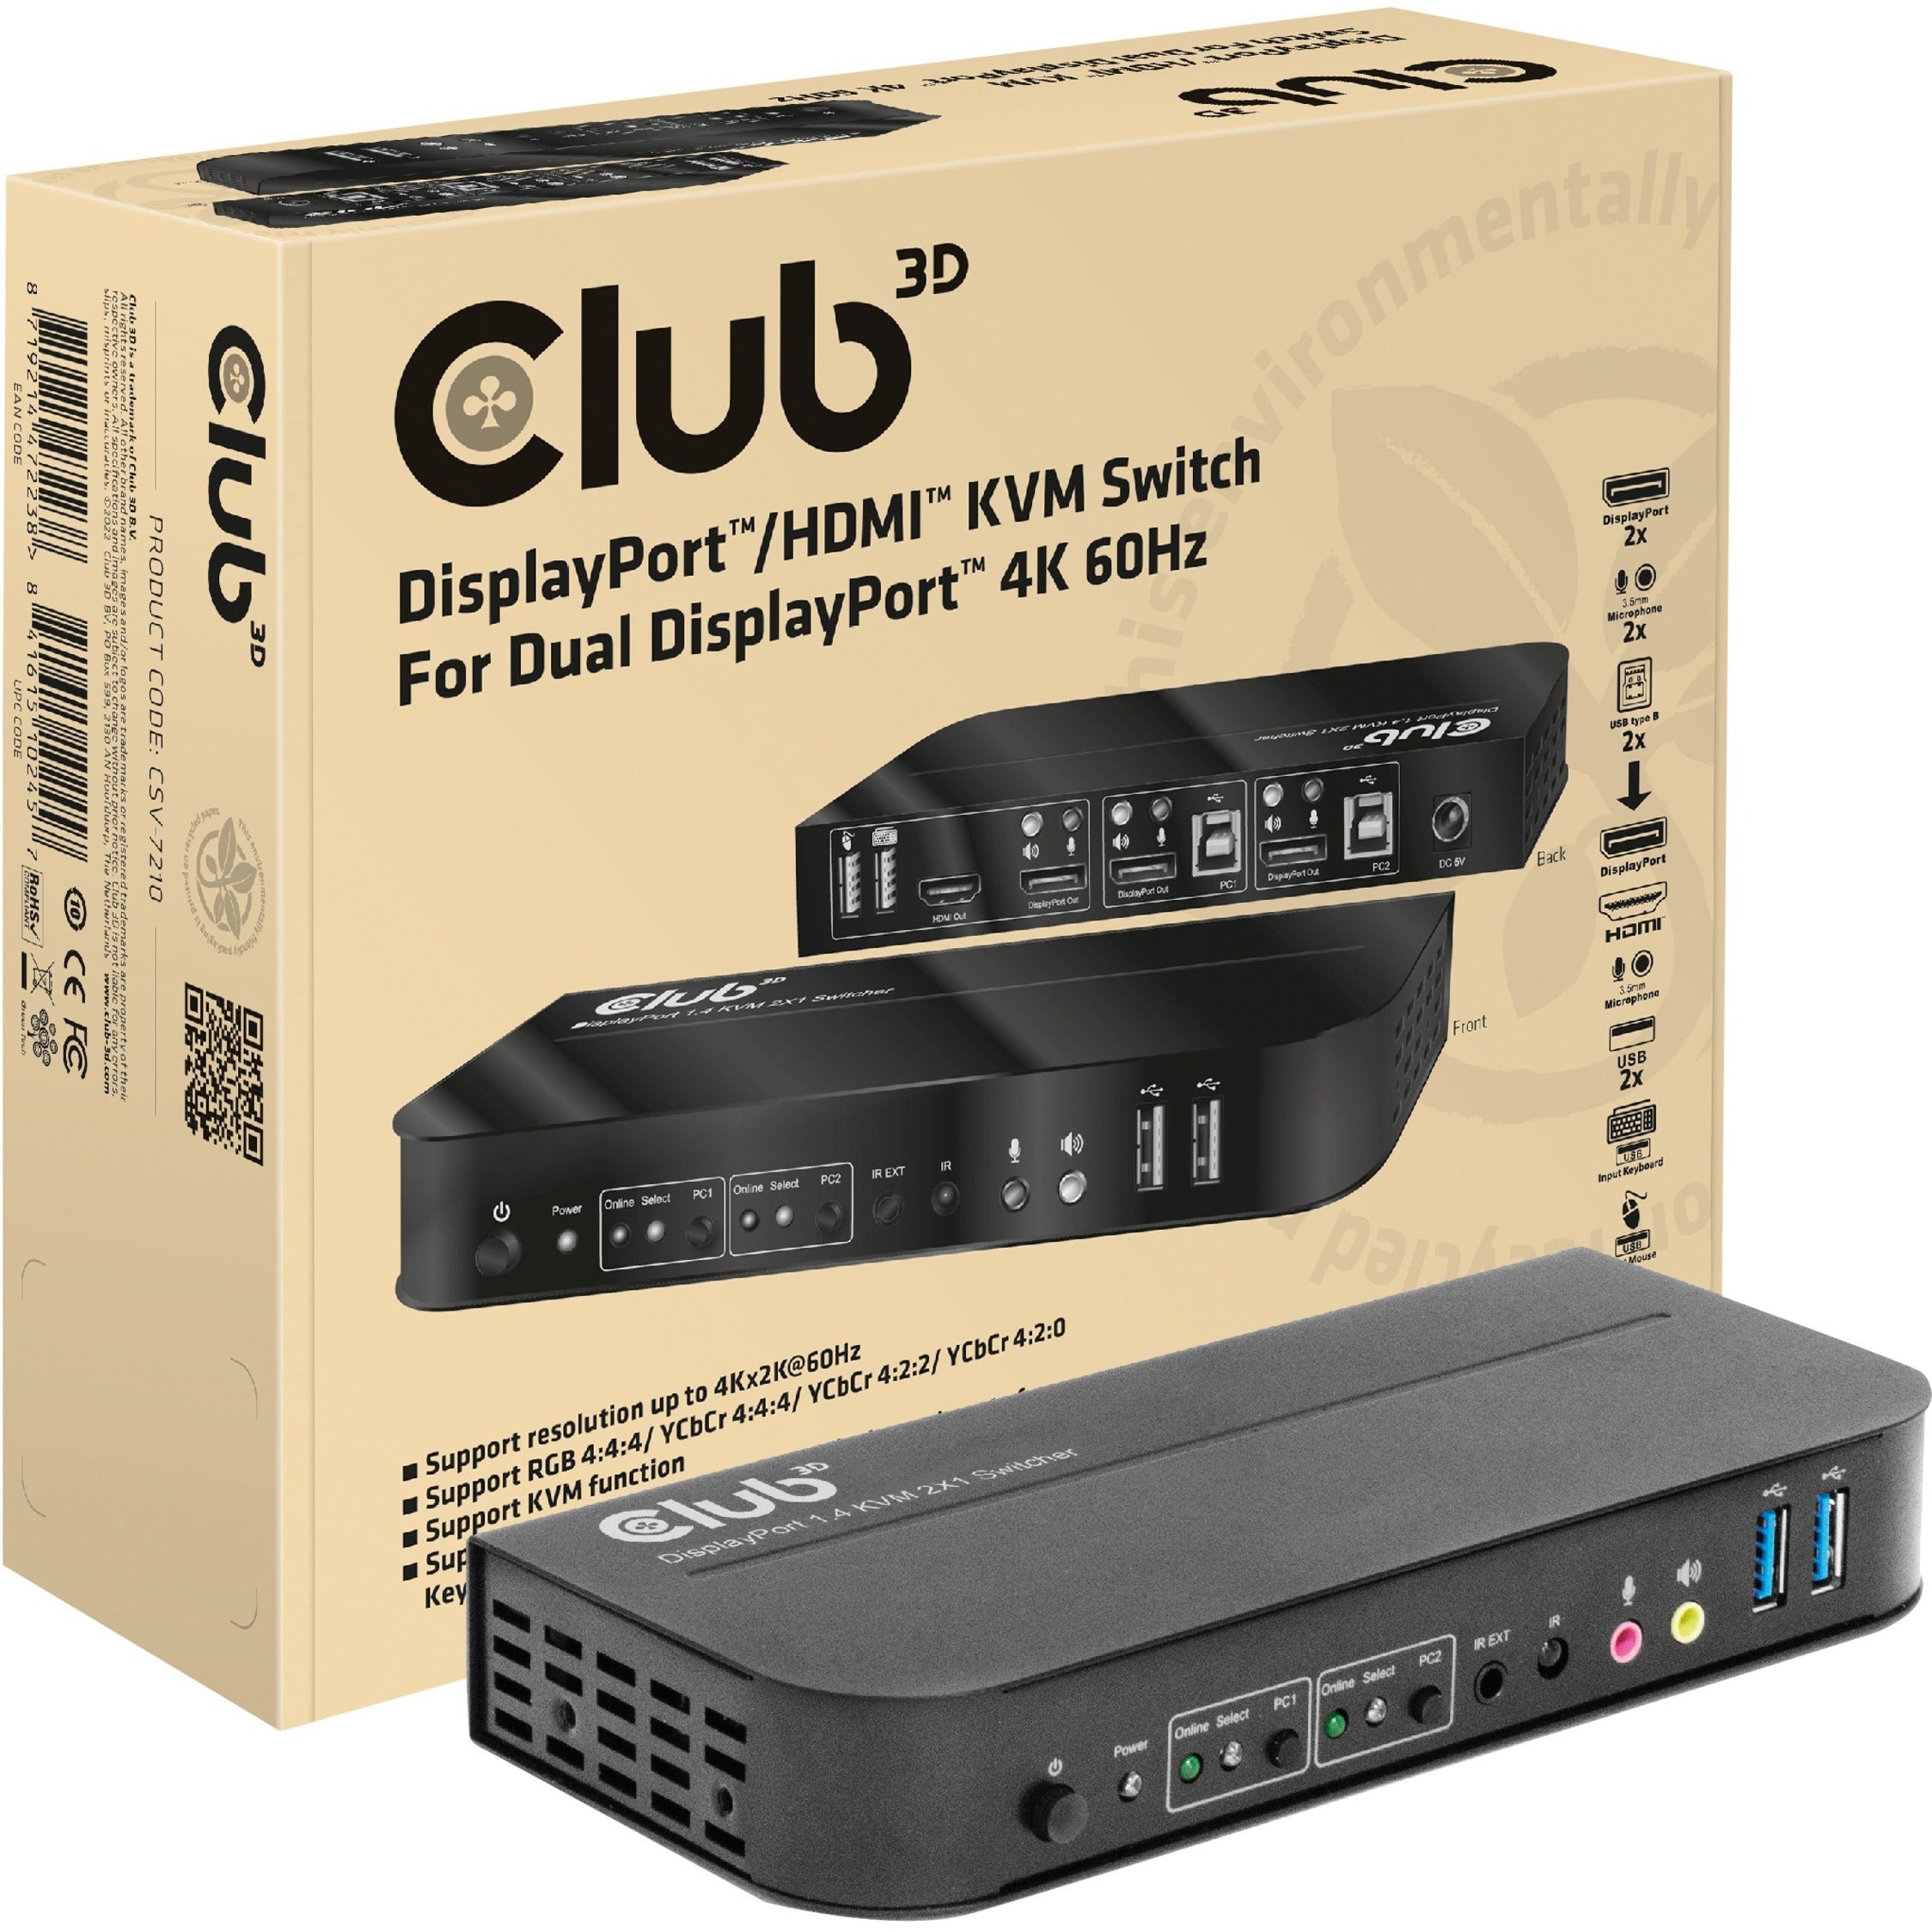 Club 3D CSV-7210 DisplayPort/HDMI KVM Switch For Dual DisplayPort 4K 60Hz, Hot Plug and RF Remote